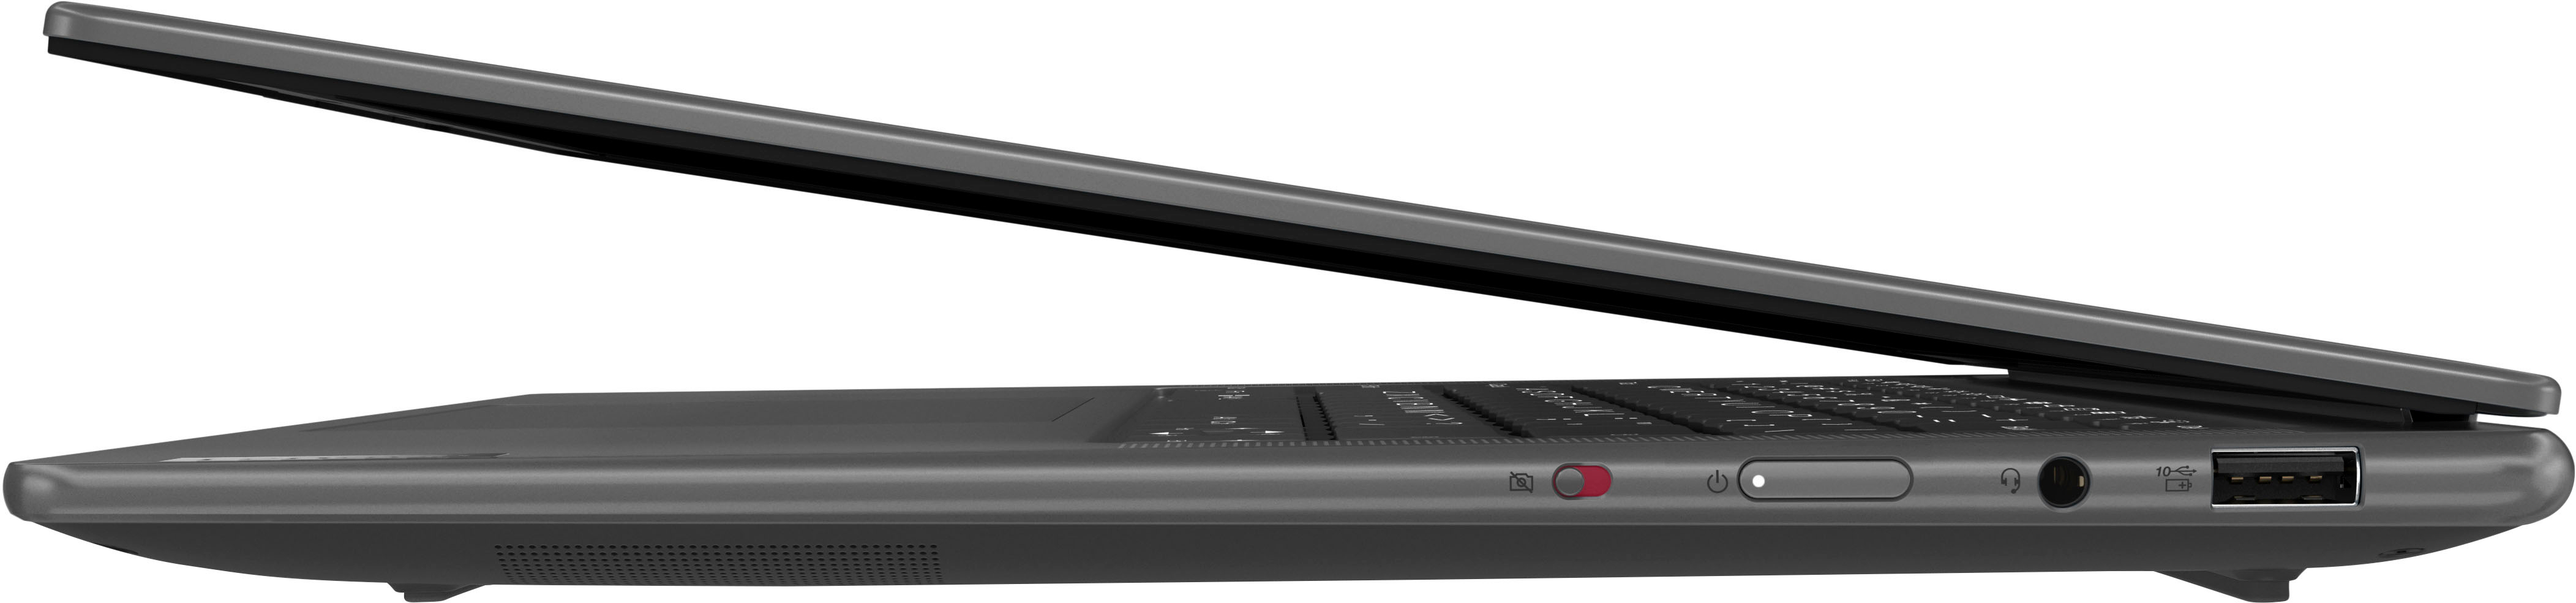 Lenovo IdeaPad Slim 7, 14 Inch AMD Laptop